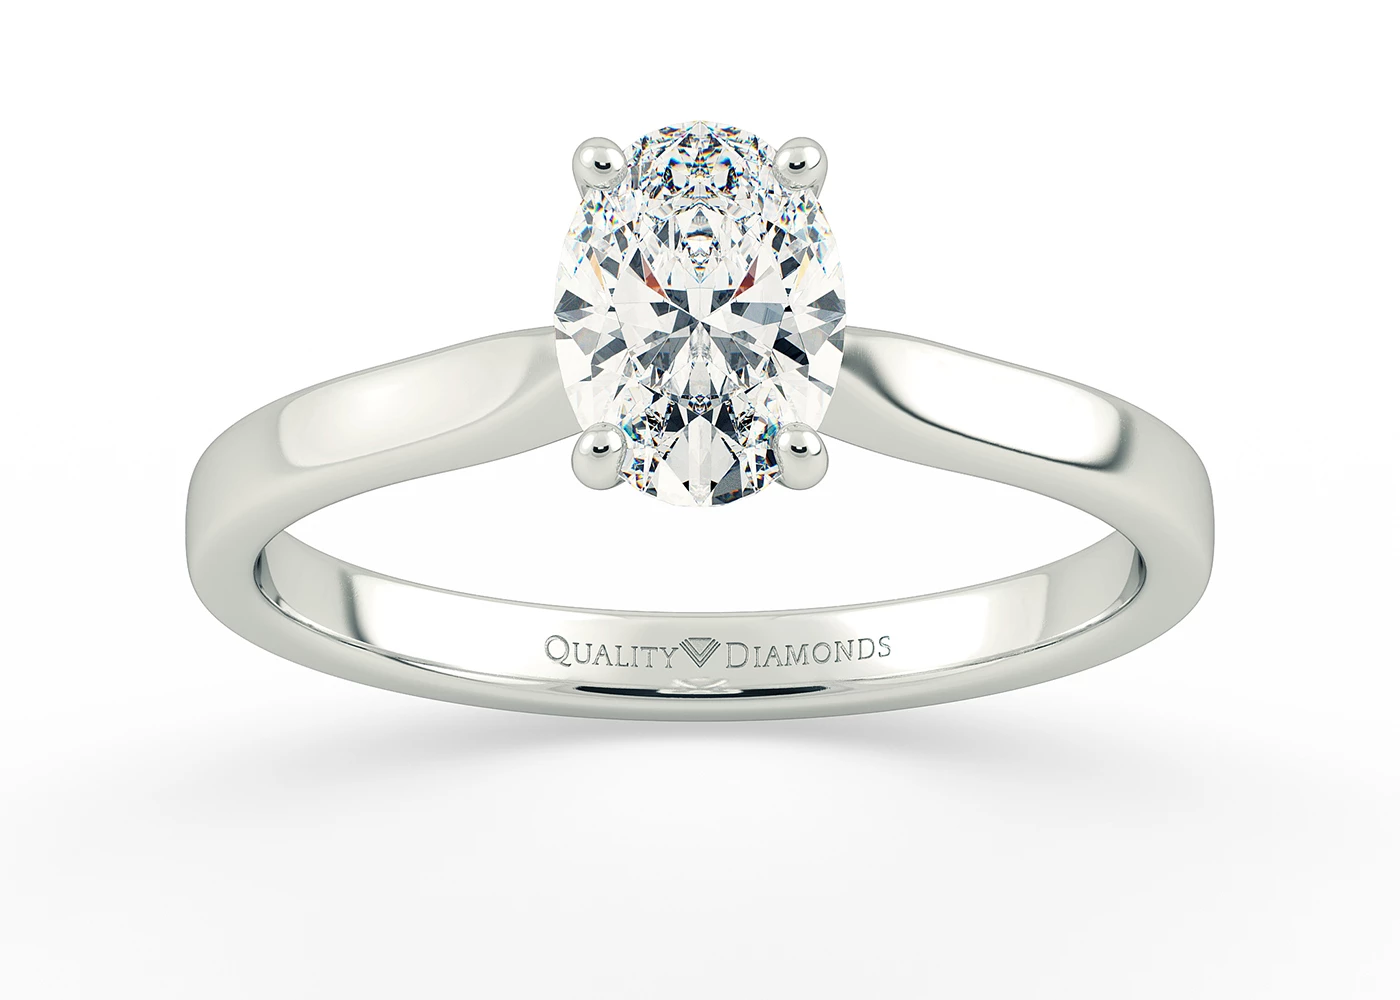 Oval Beau Diamond Ring in 9K White Gold